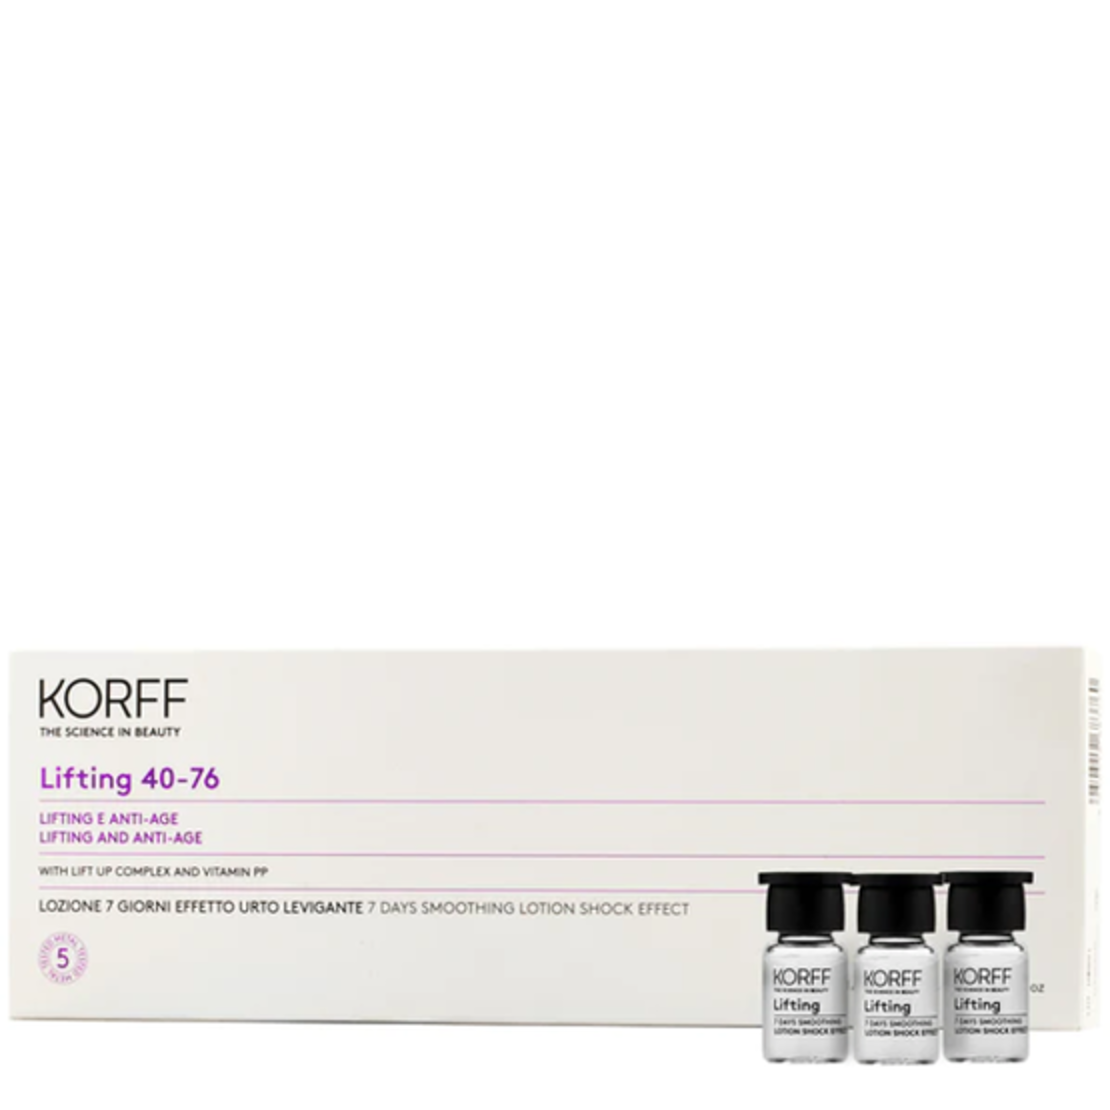 korff-lifting 40-76 7 days smoothing lotion shock effect